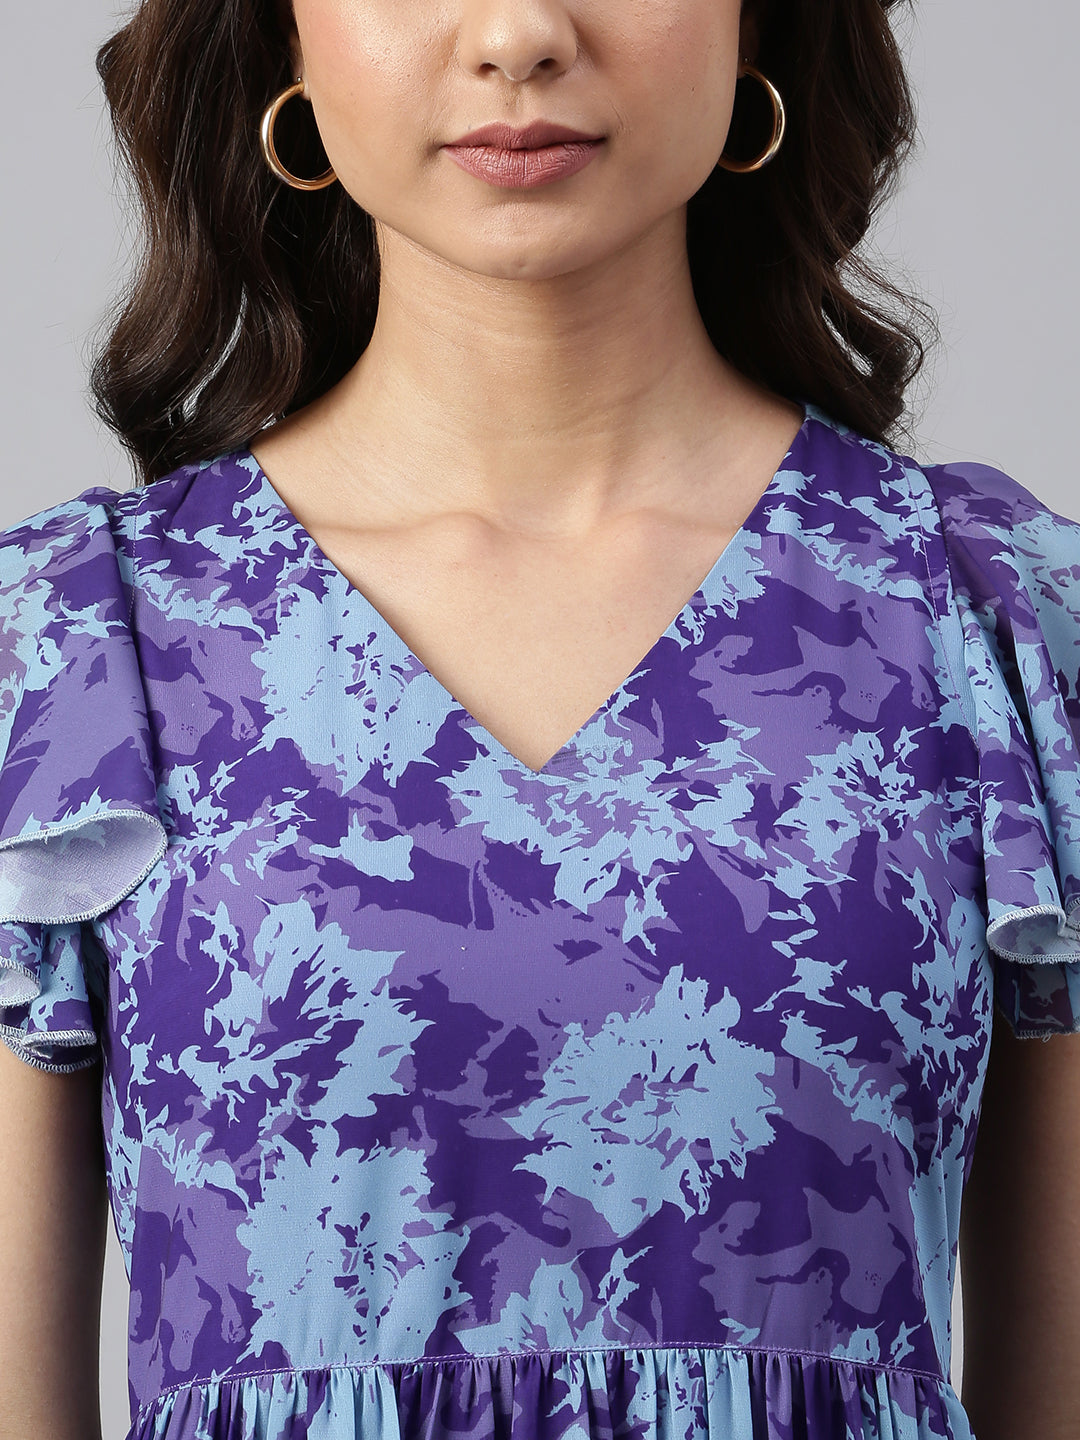 Women's Printed Blue Georgette Dress - Janasya